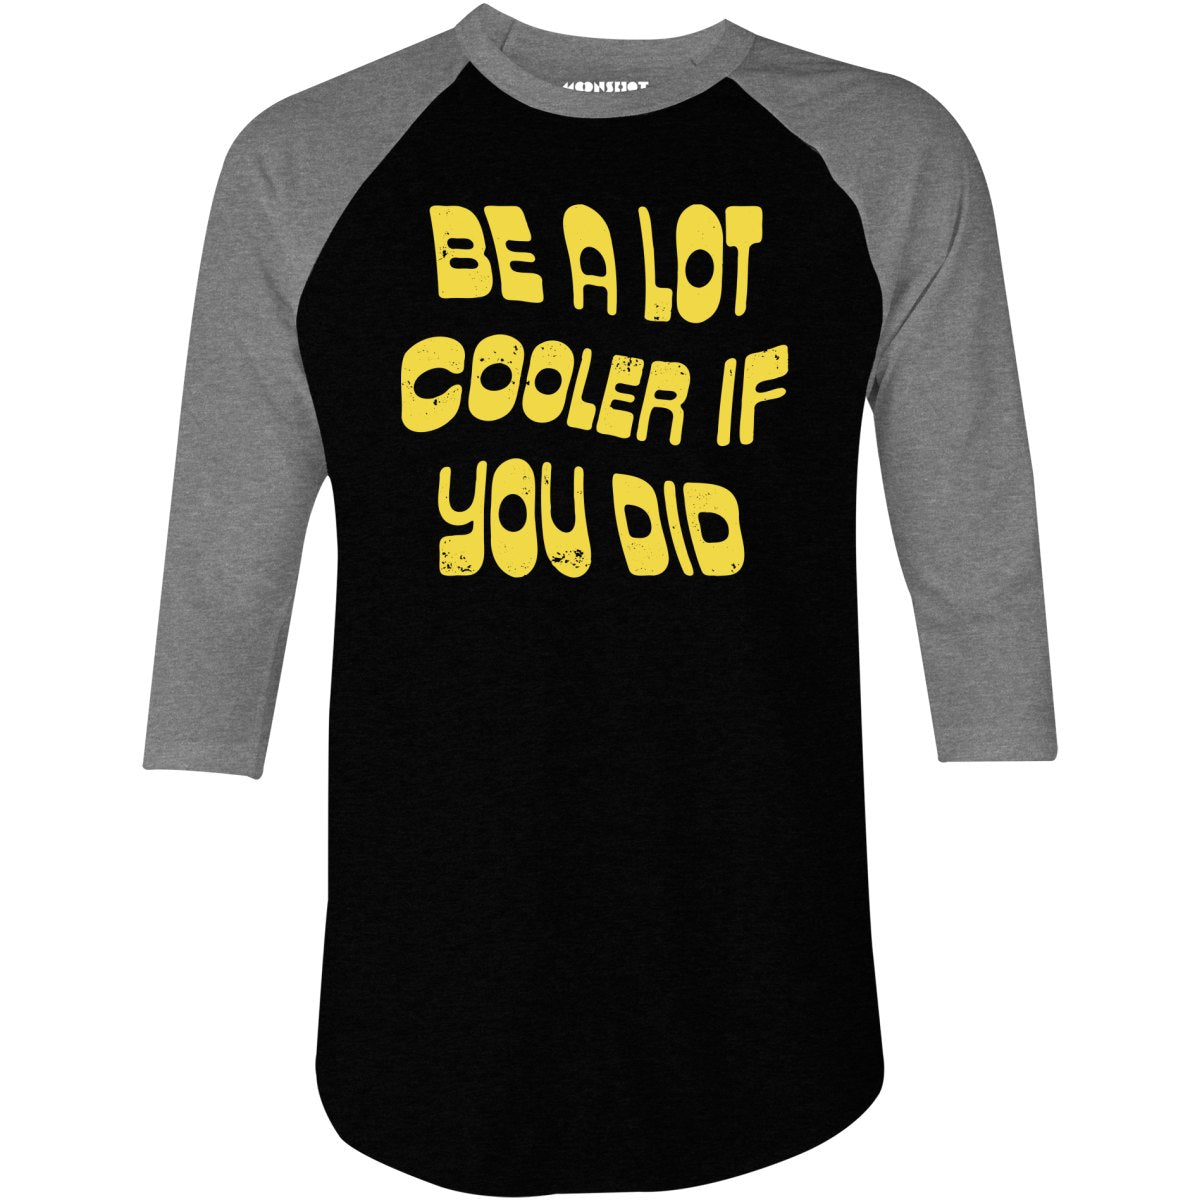 Be a Lot Cooler if You Did - 3/4 Sleeve Raglan T-Shirt